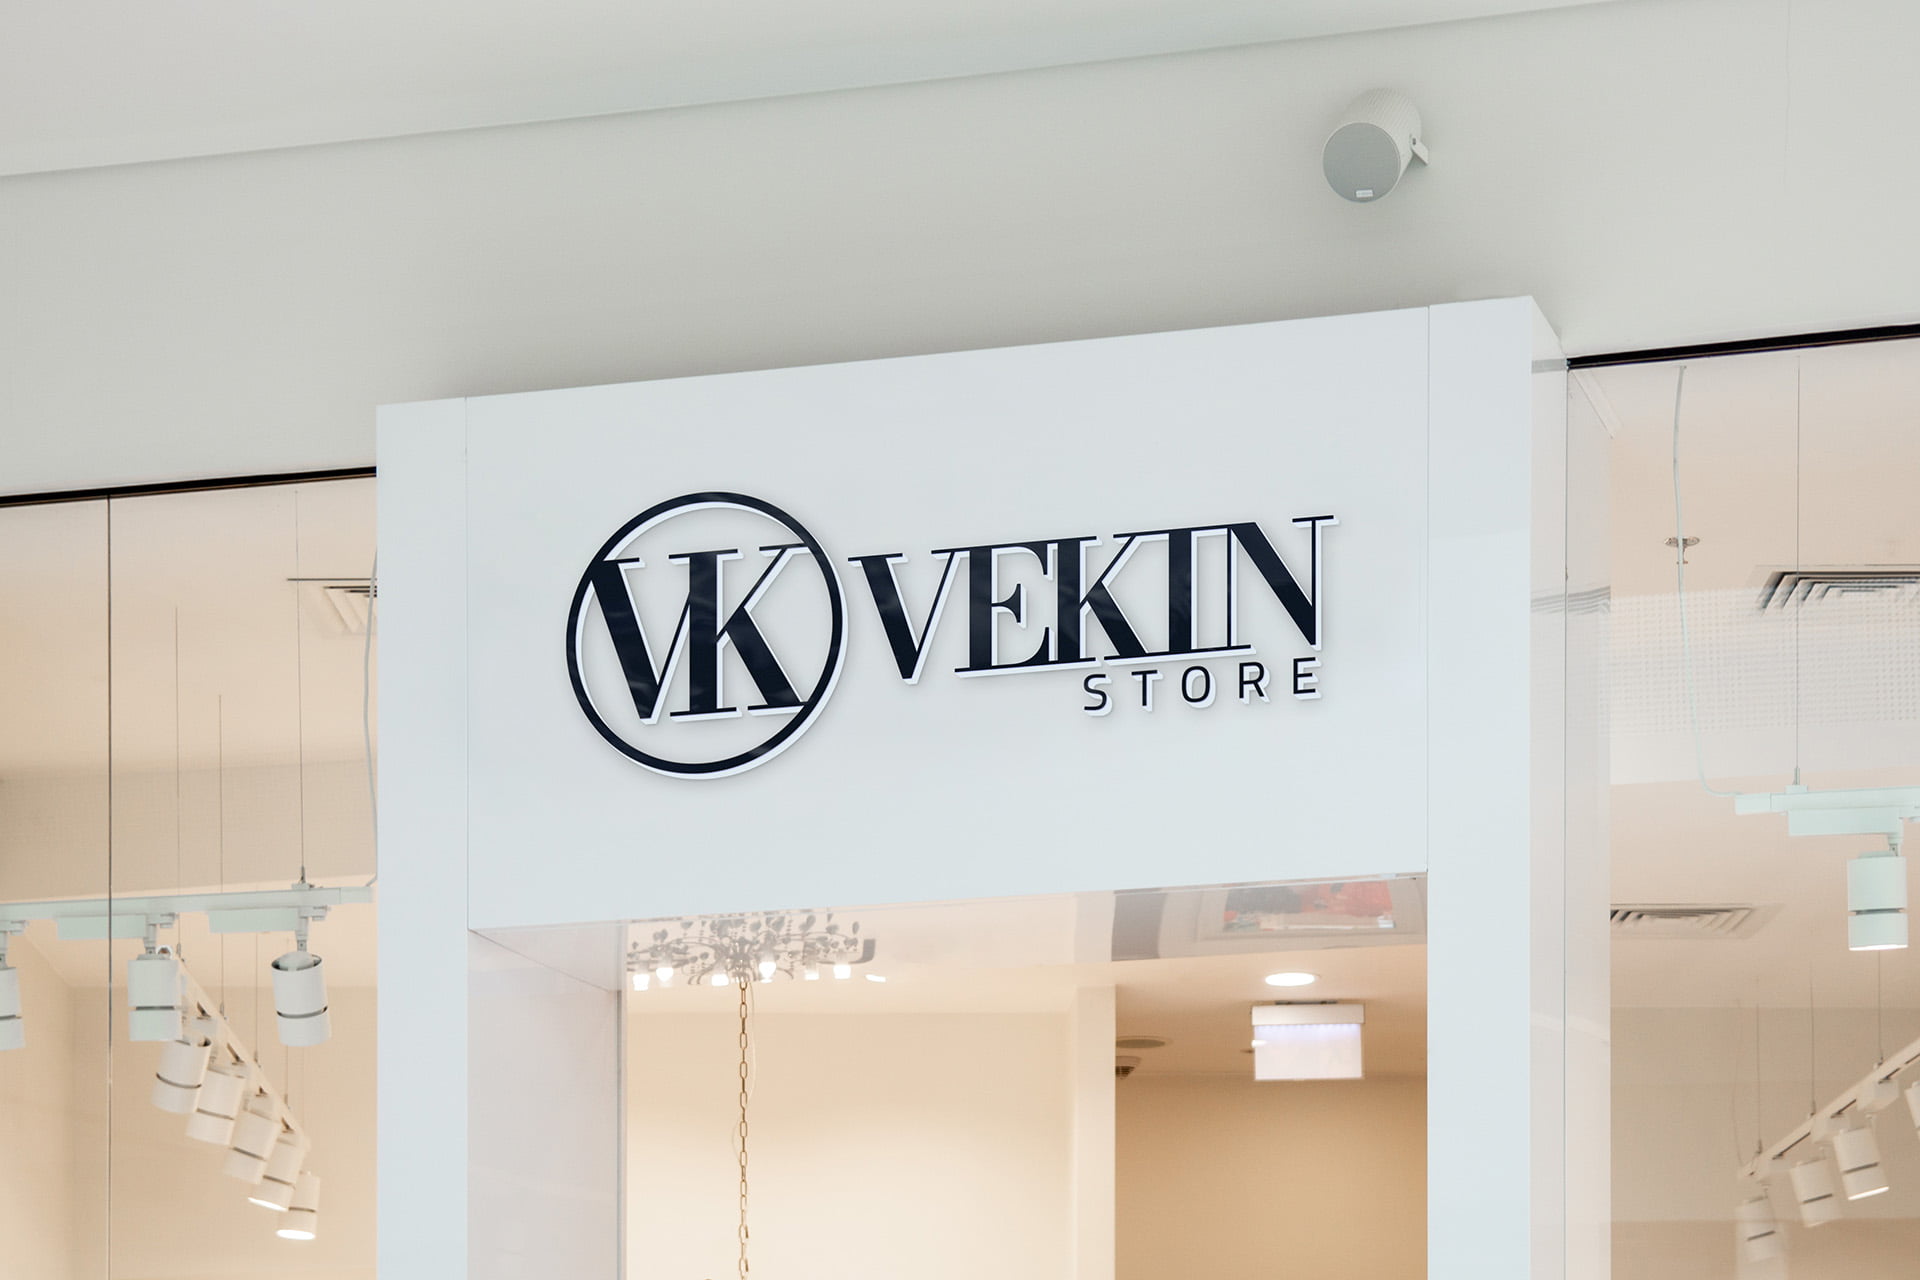 VEKIN Store Logo Mockup